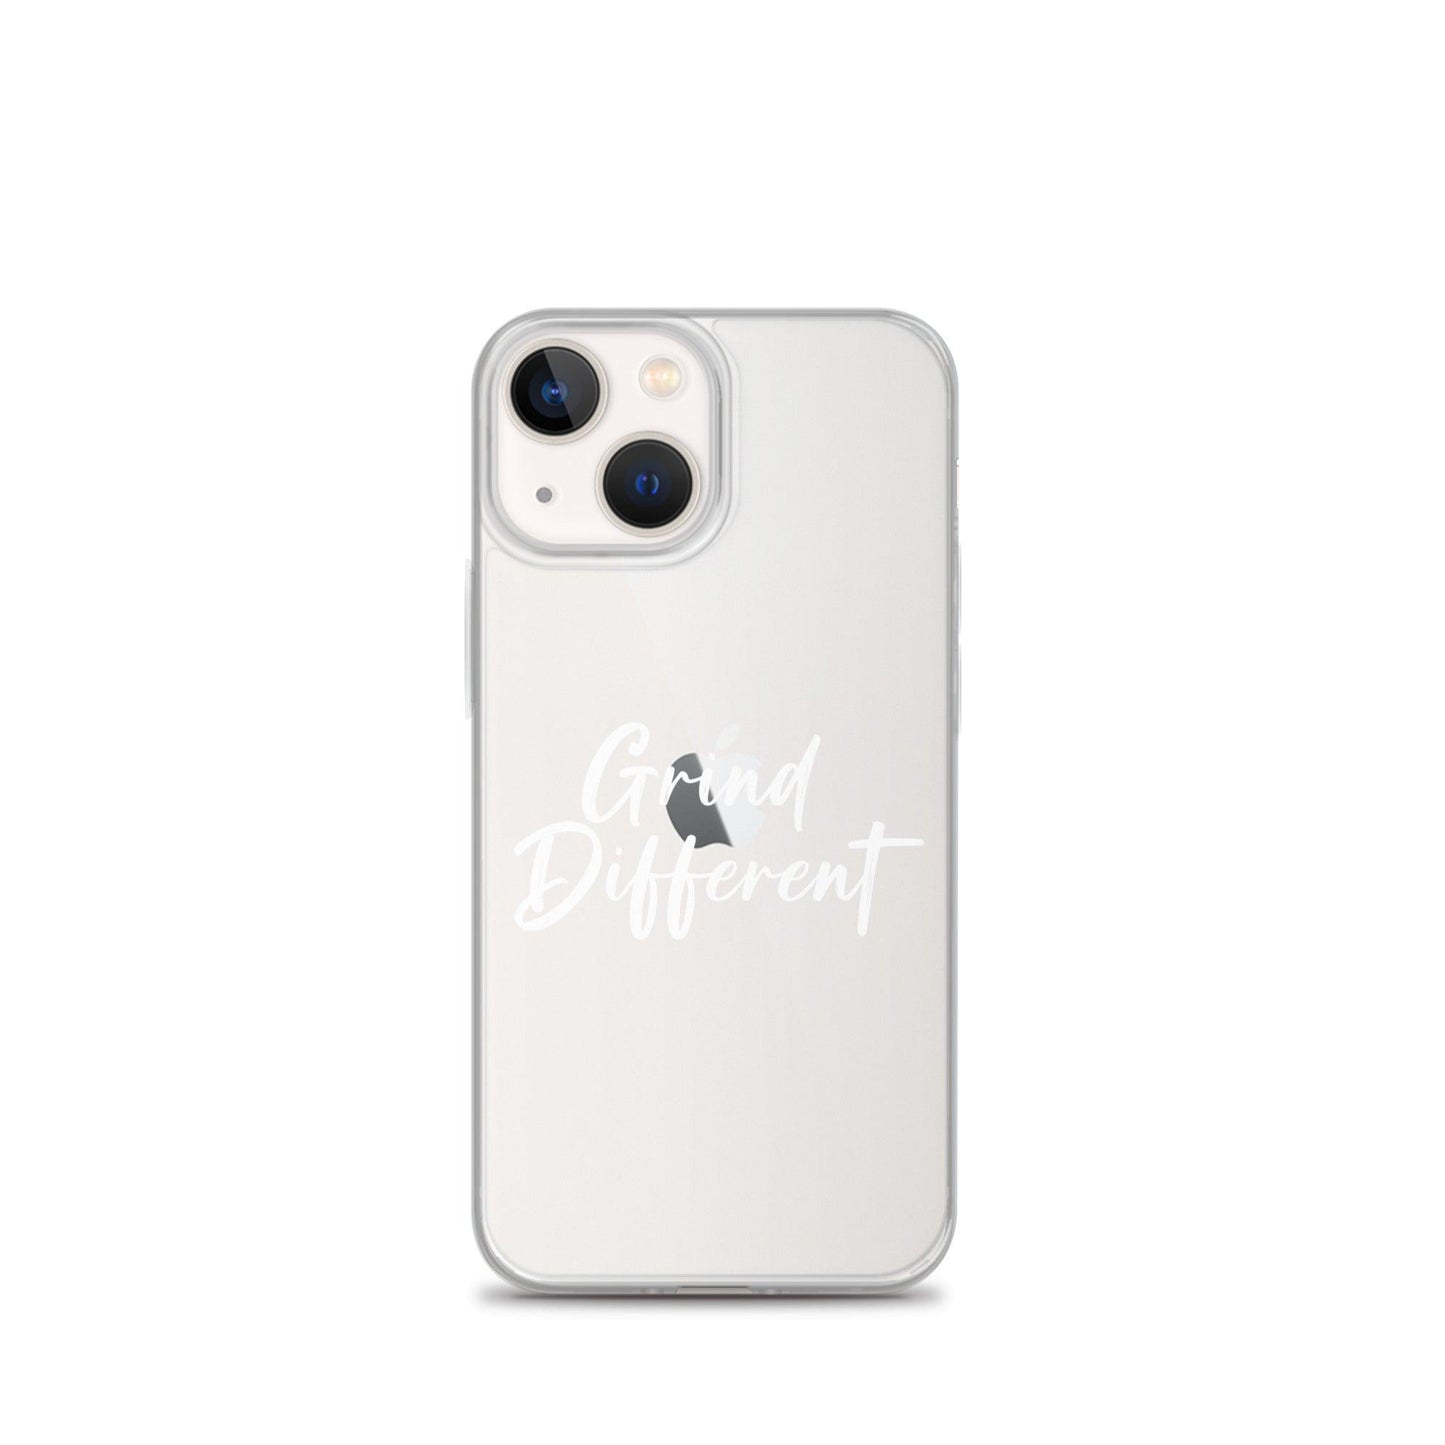 Claudale Davis III “Grind Different” iPhone Case - Fan Arch